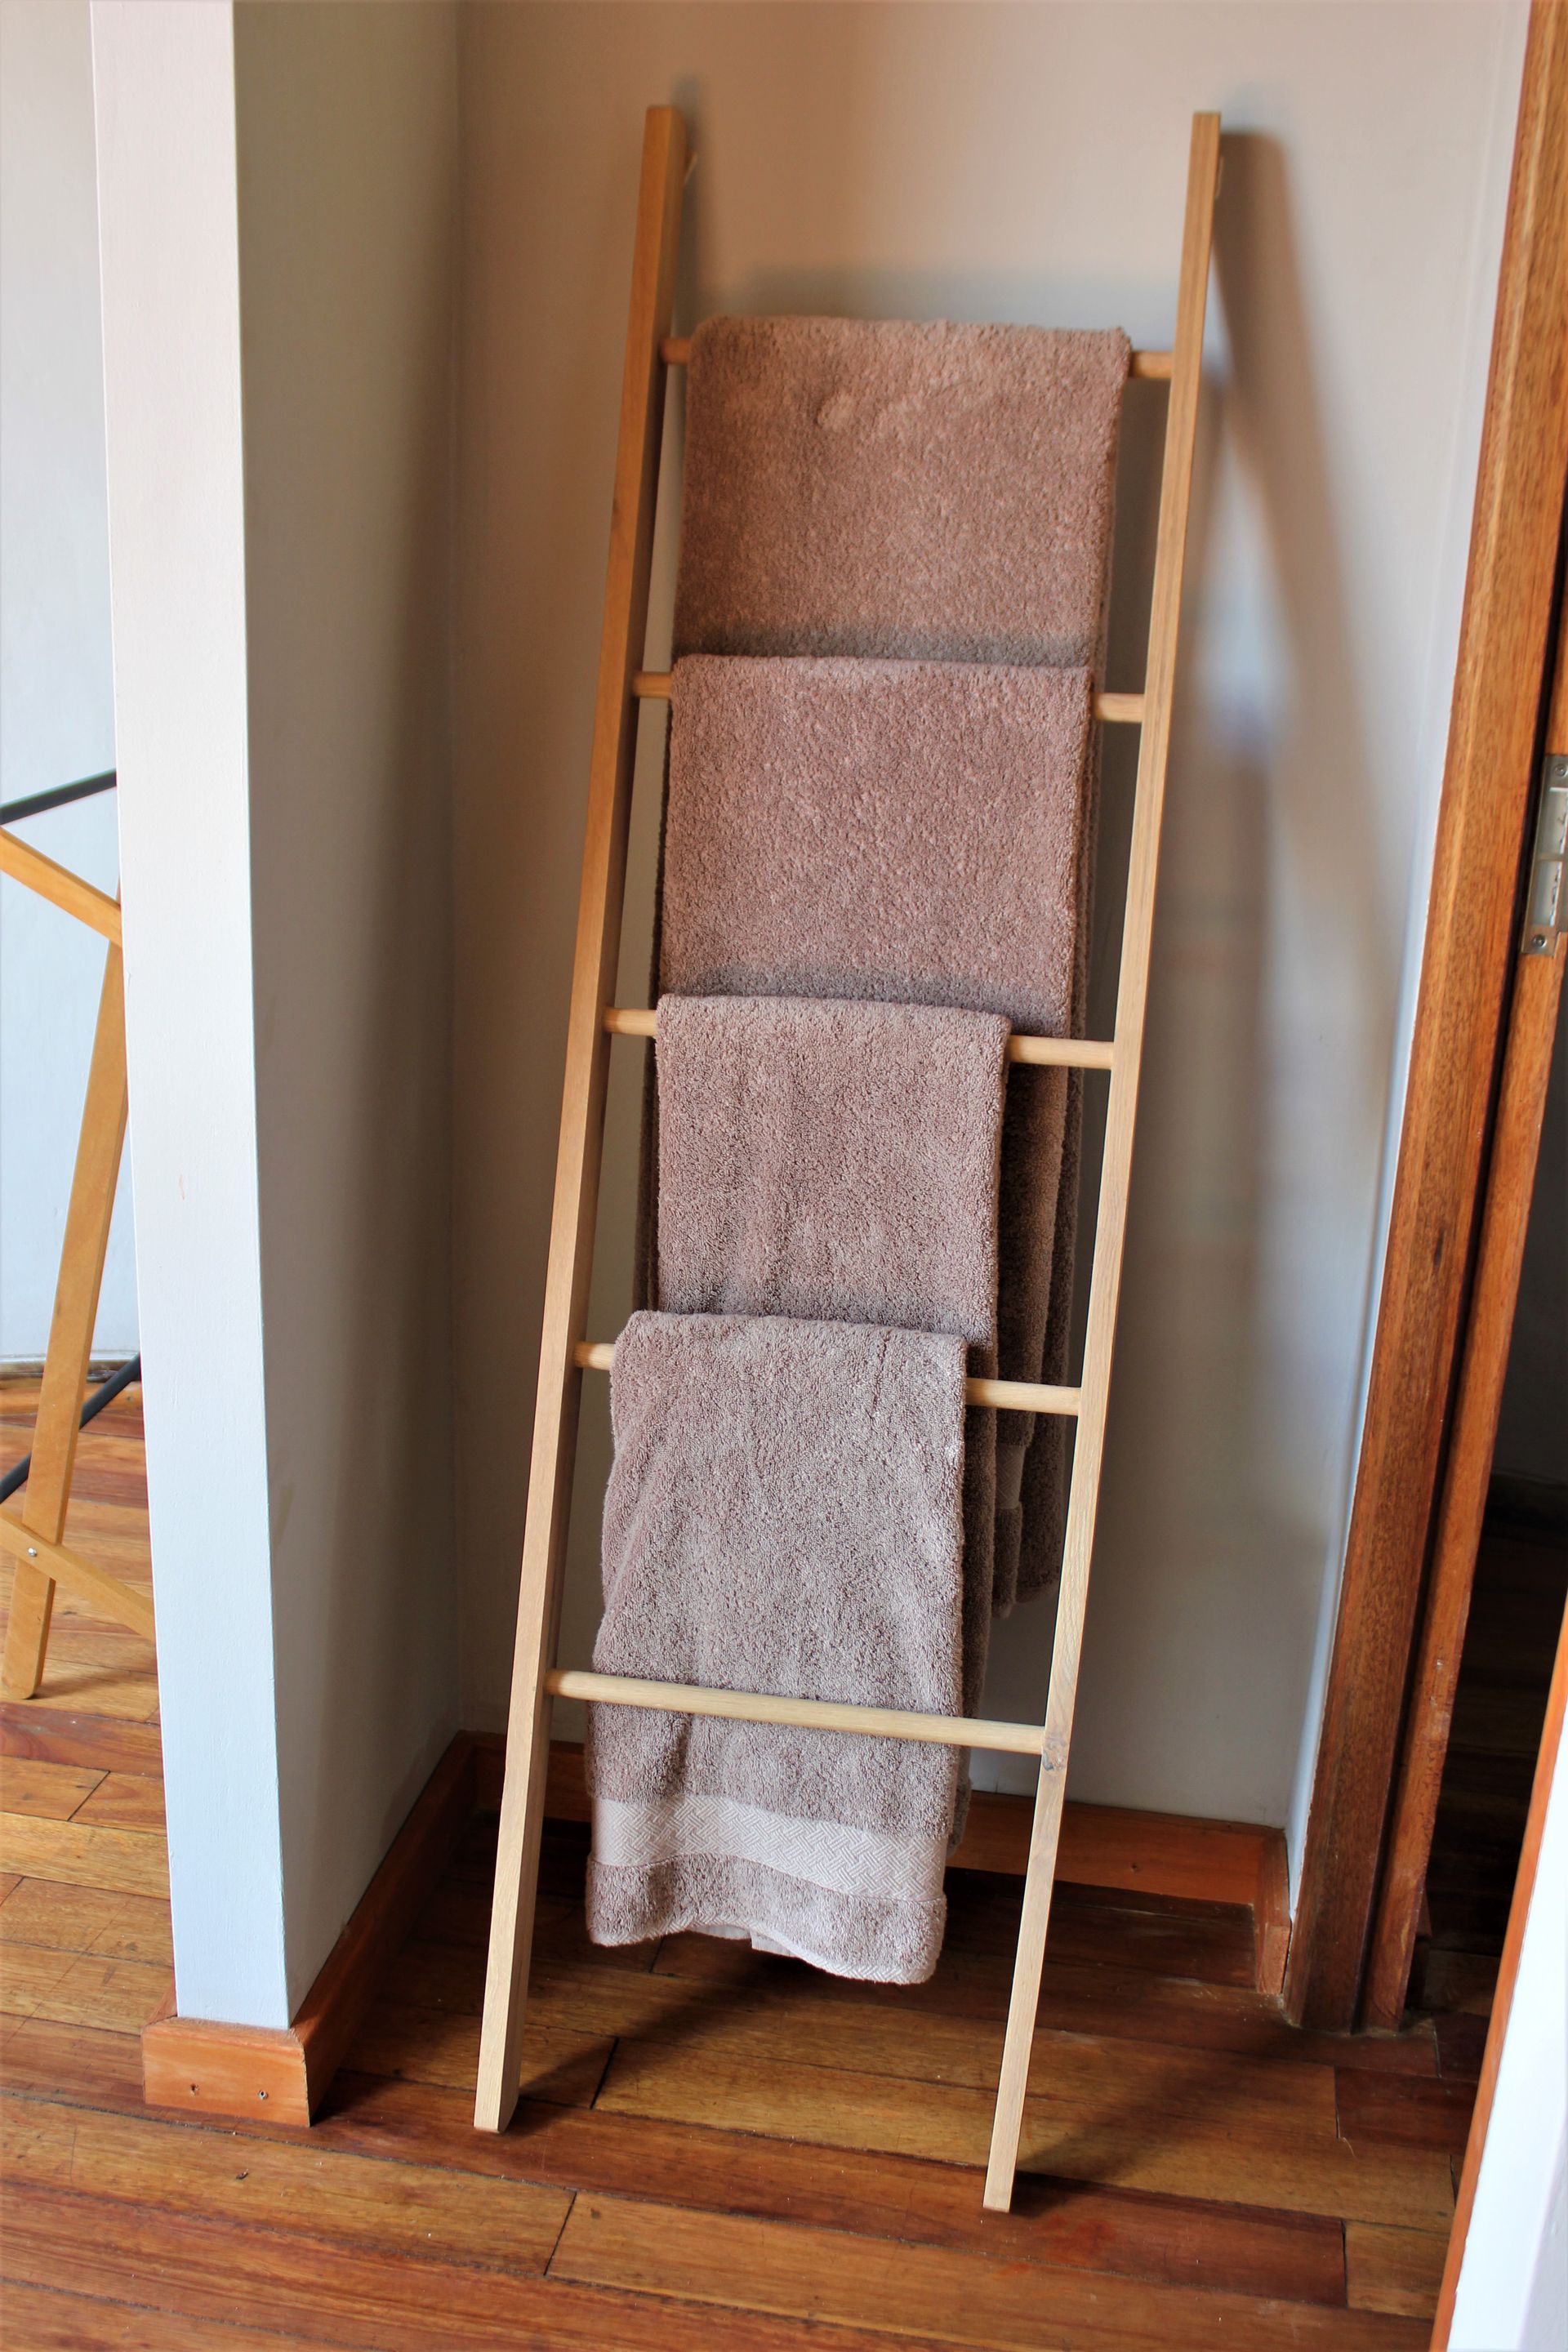 towel on a rack